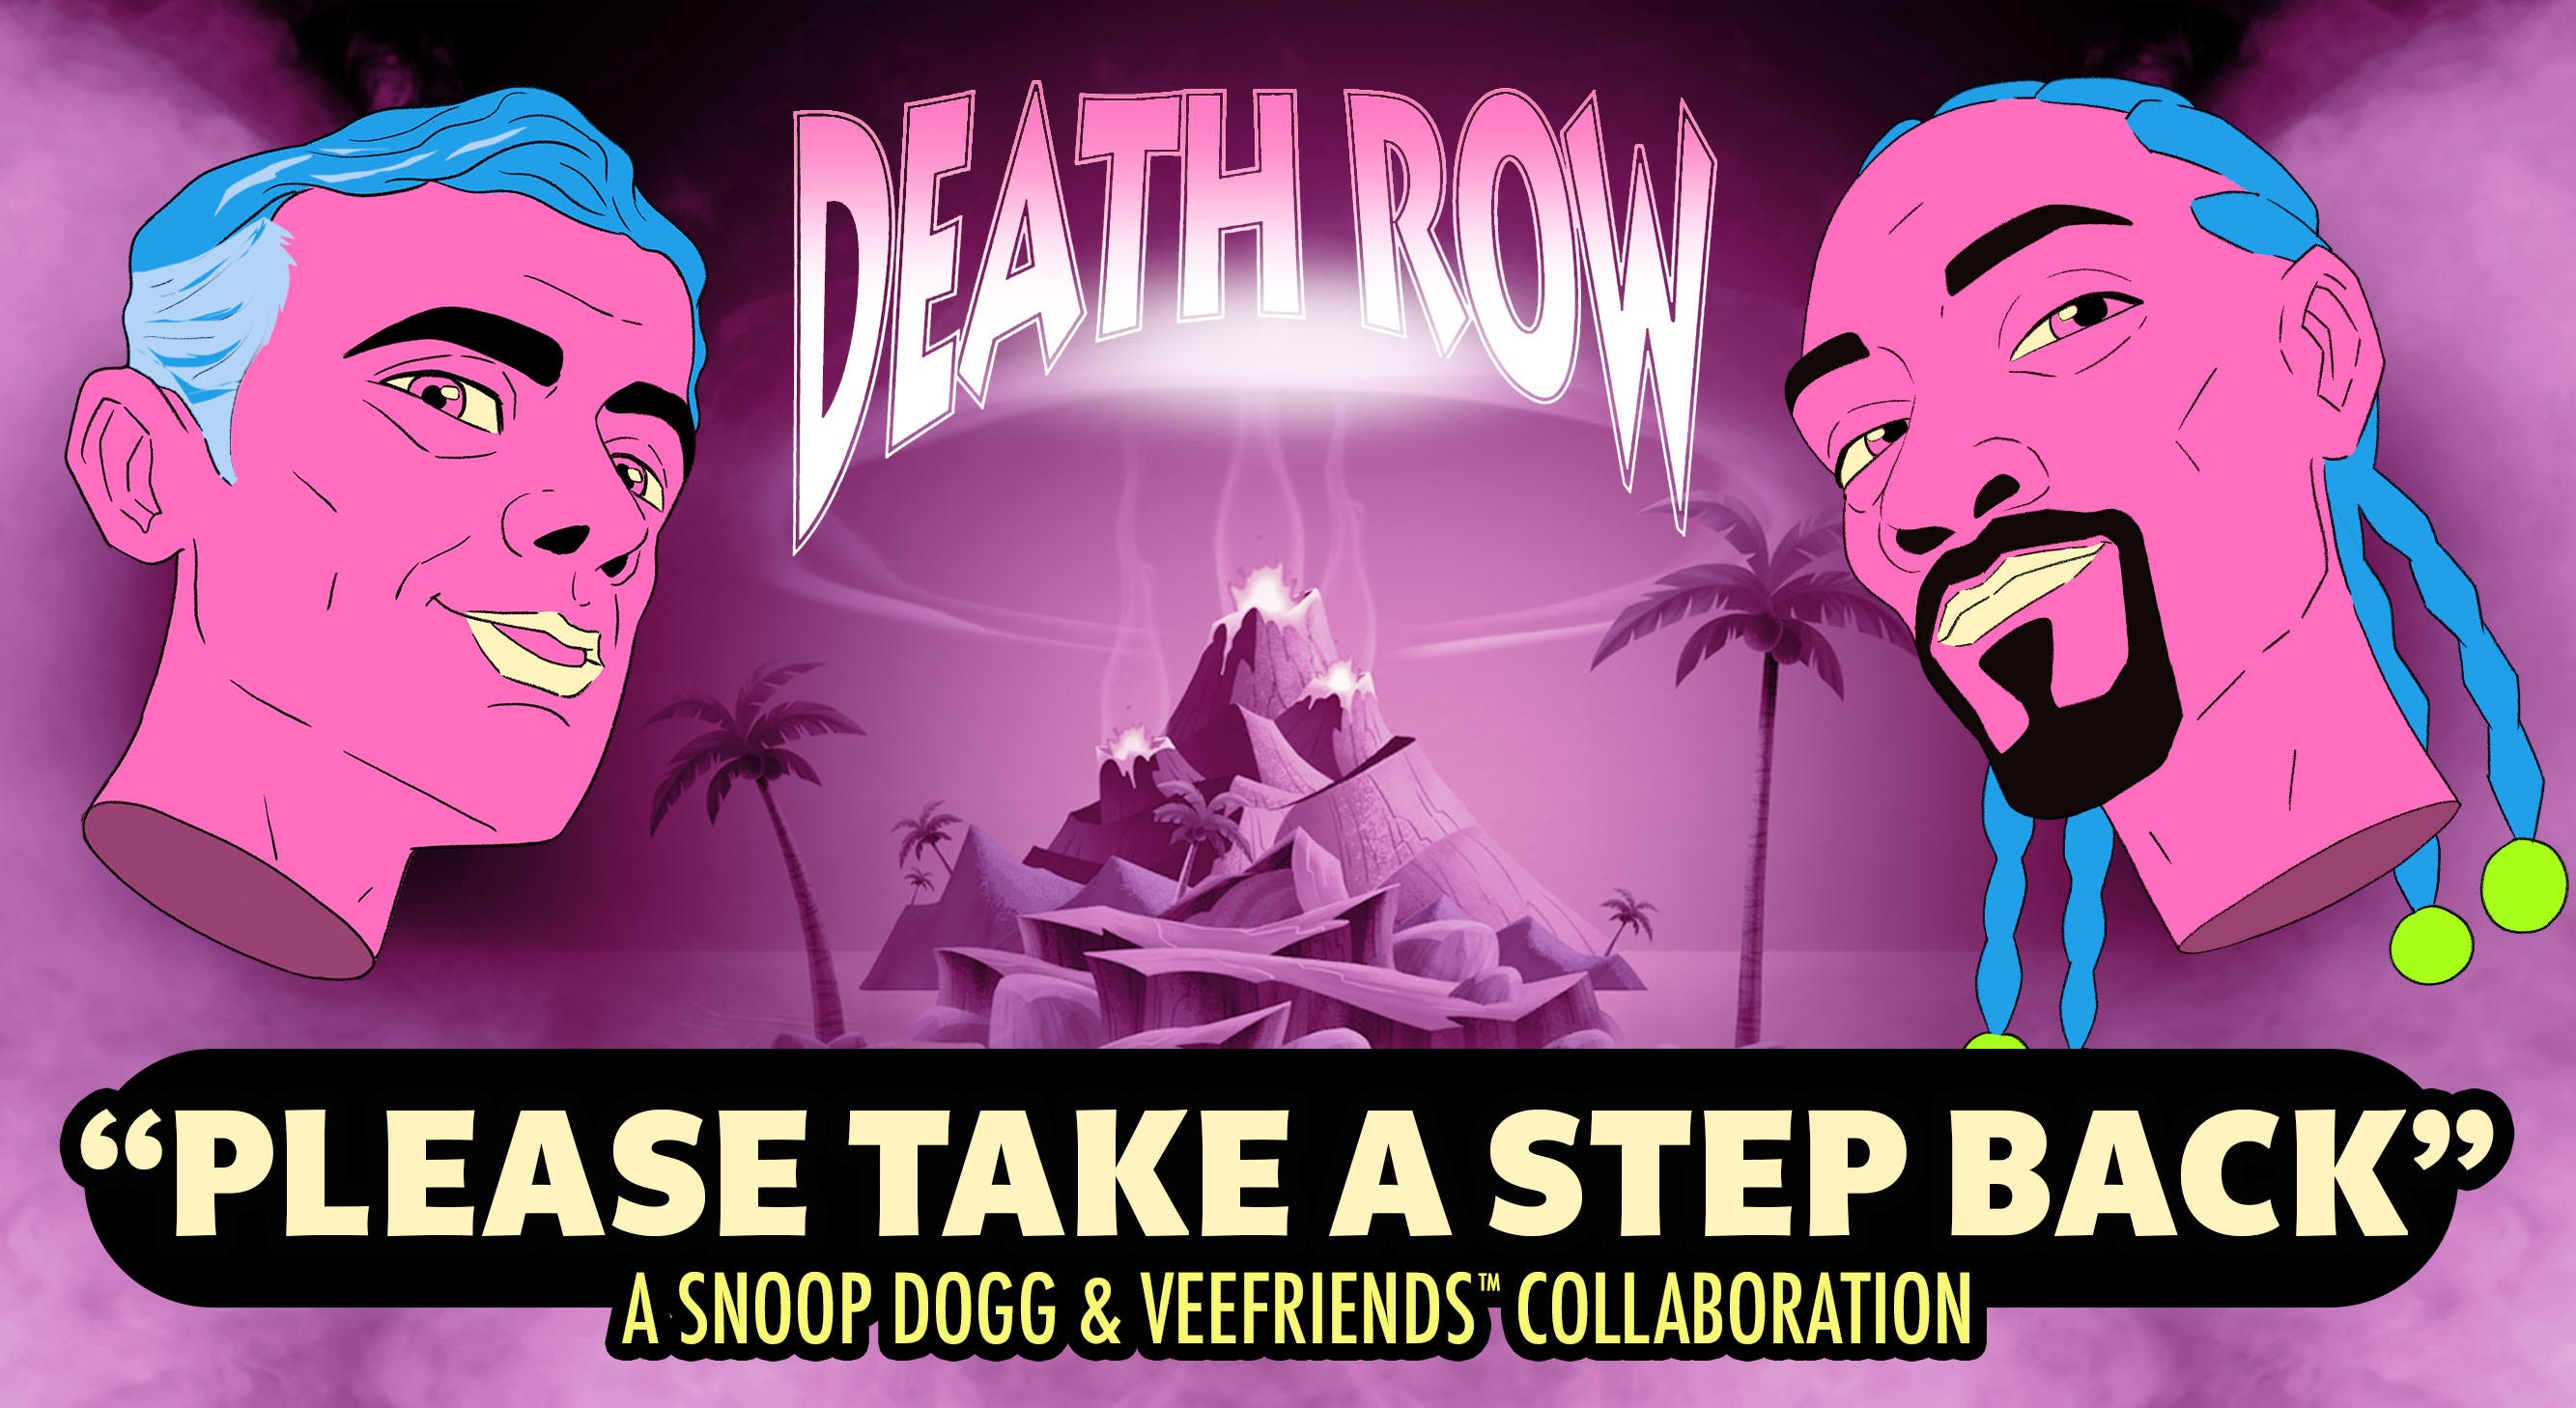 Snoop Dogg & VeeFriends의 협업 NFT 컬렉션 및 노래 "제발 물러서세요" 발표